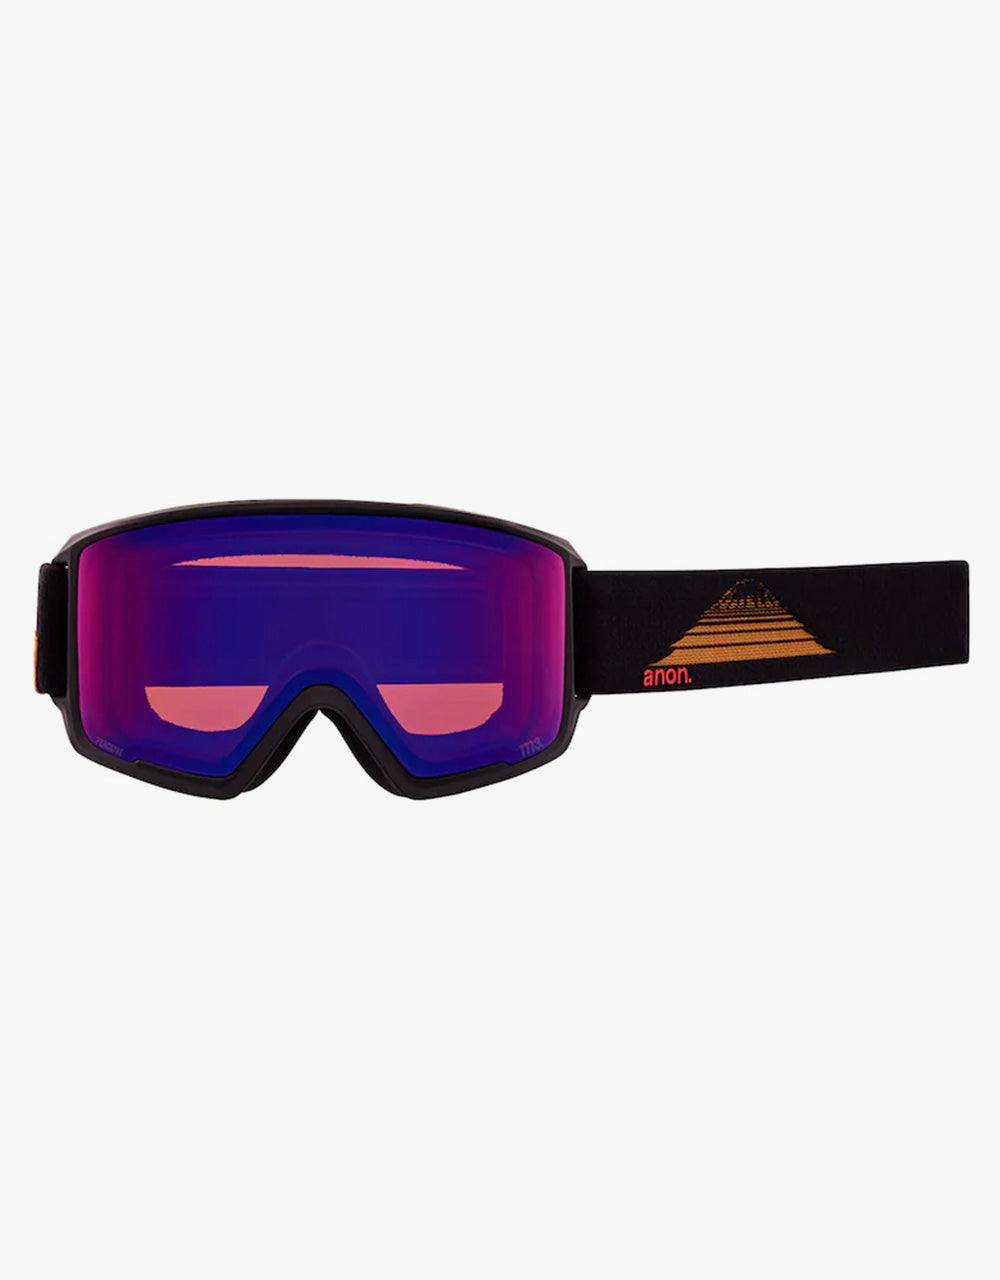 Anon M3 MFI® Snowboard Goggles - Pollard/Perceive Sunny Onyx